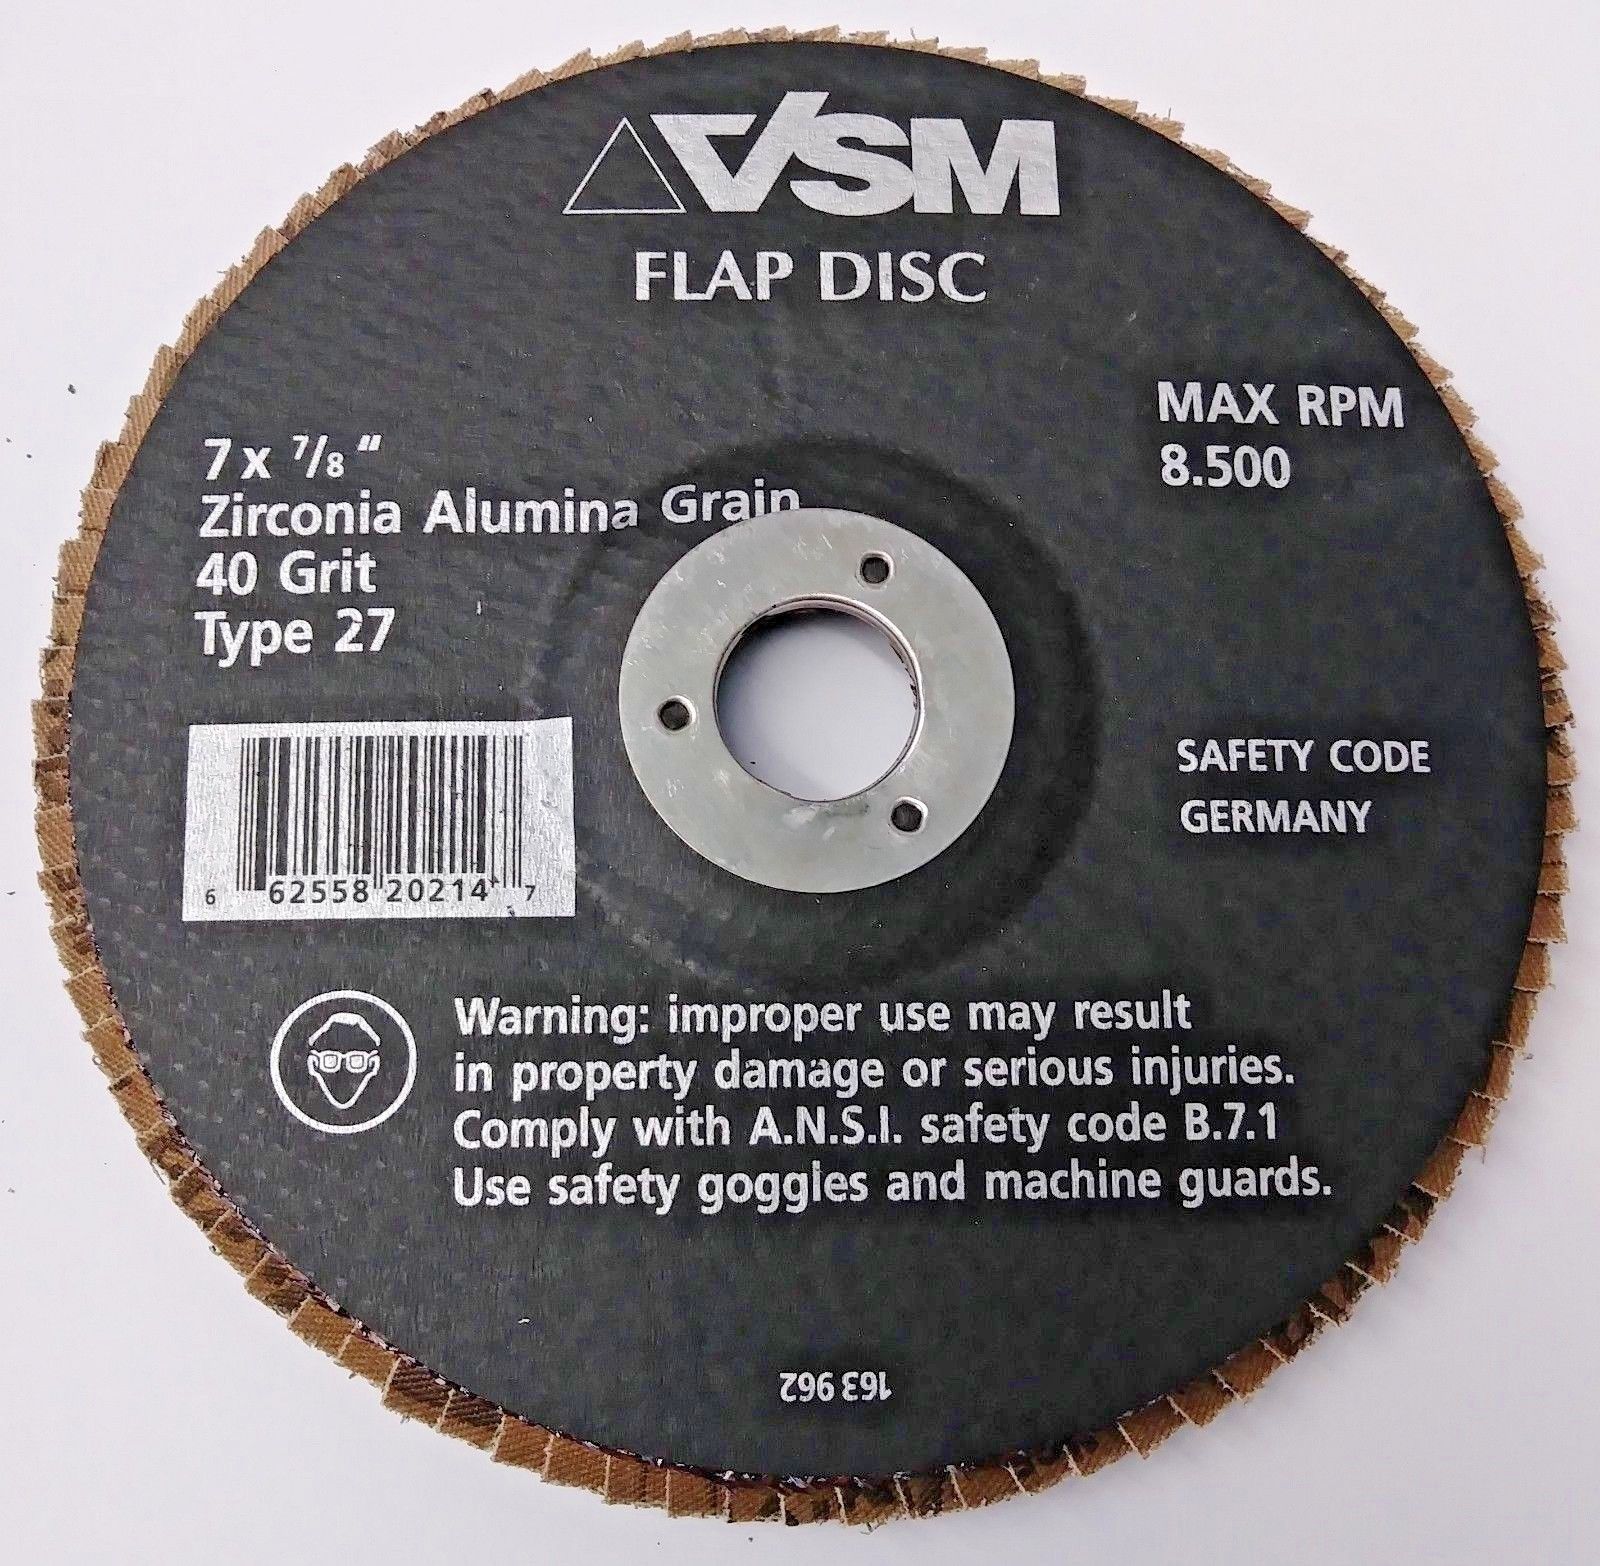 VSM 163 962 7" x 7/8" Zirconia Alumina Grain 40 Grit Type 27 Flap Disc Germany